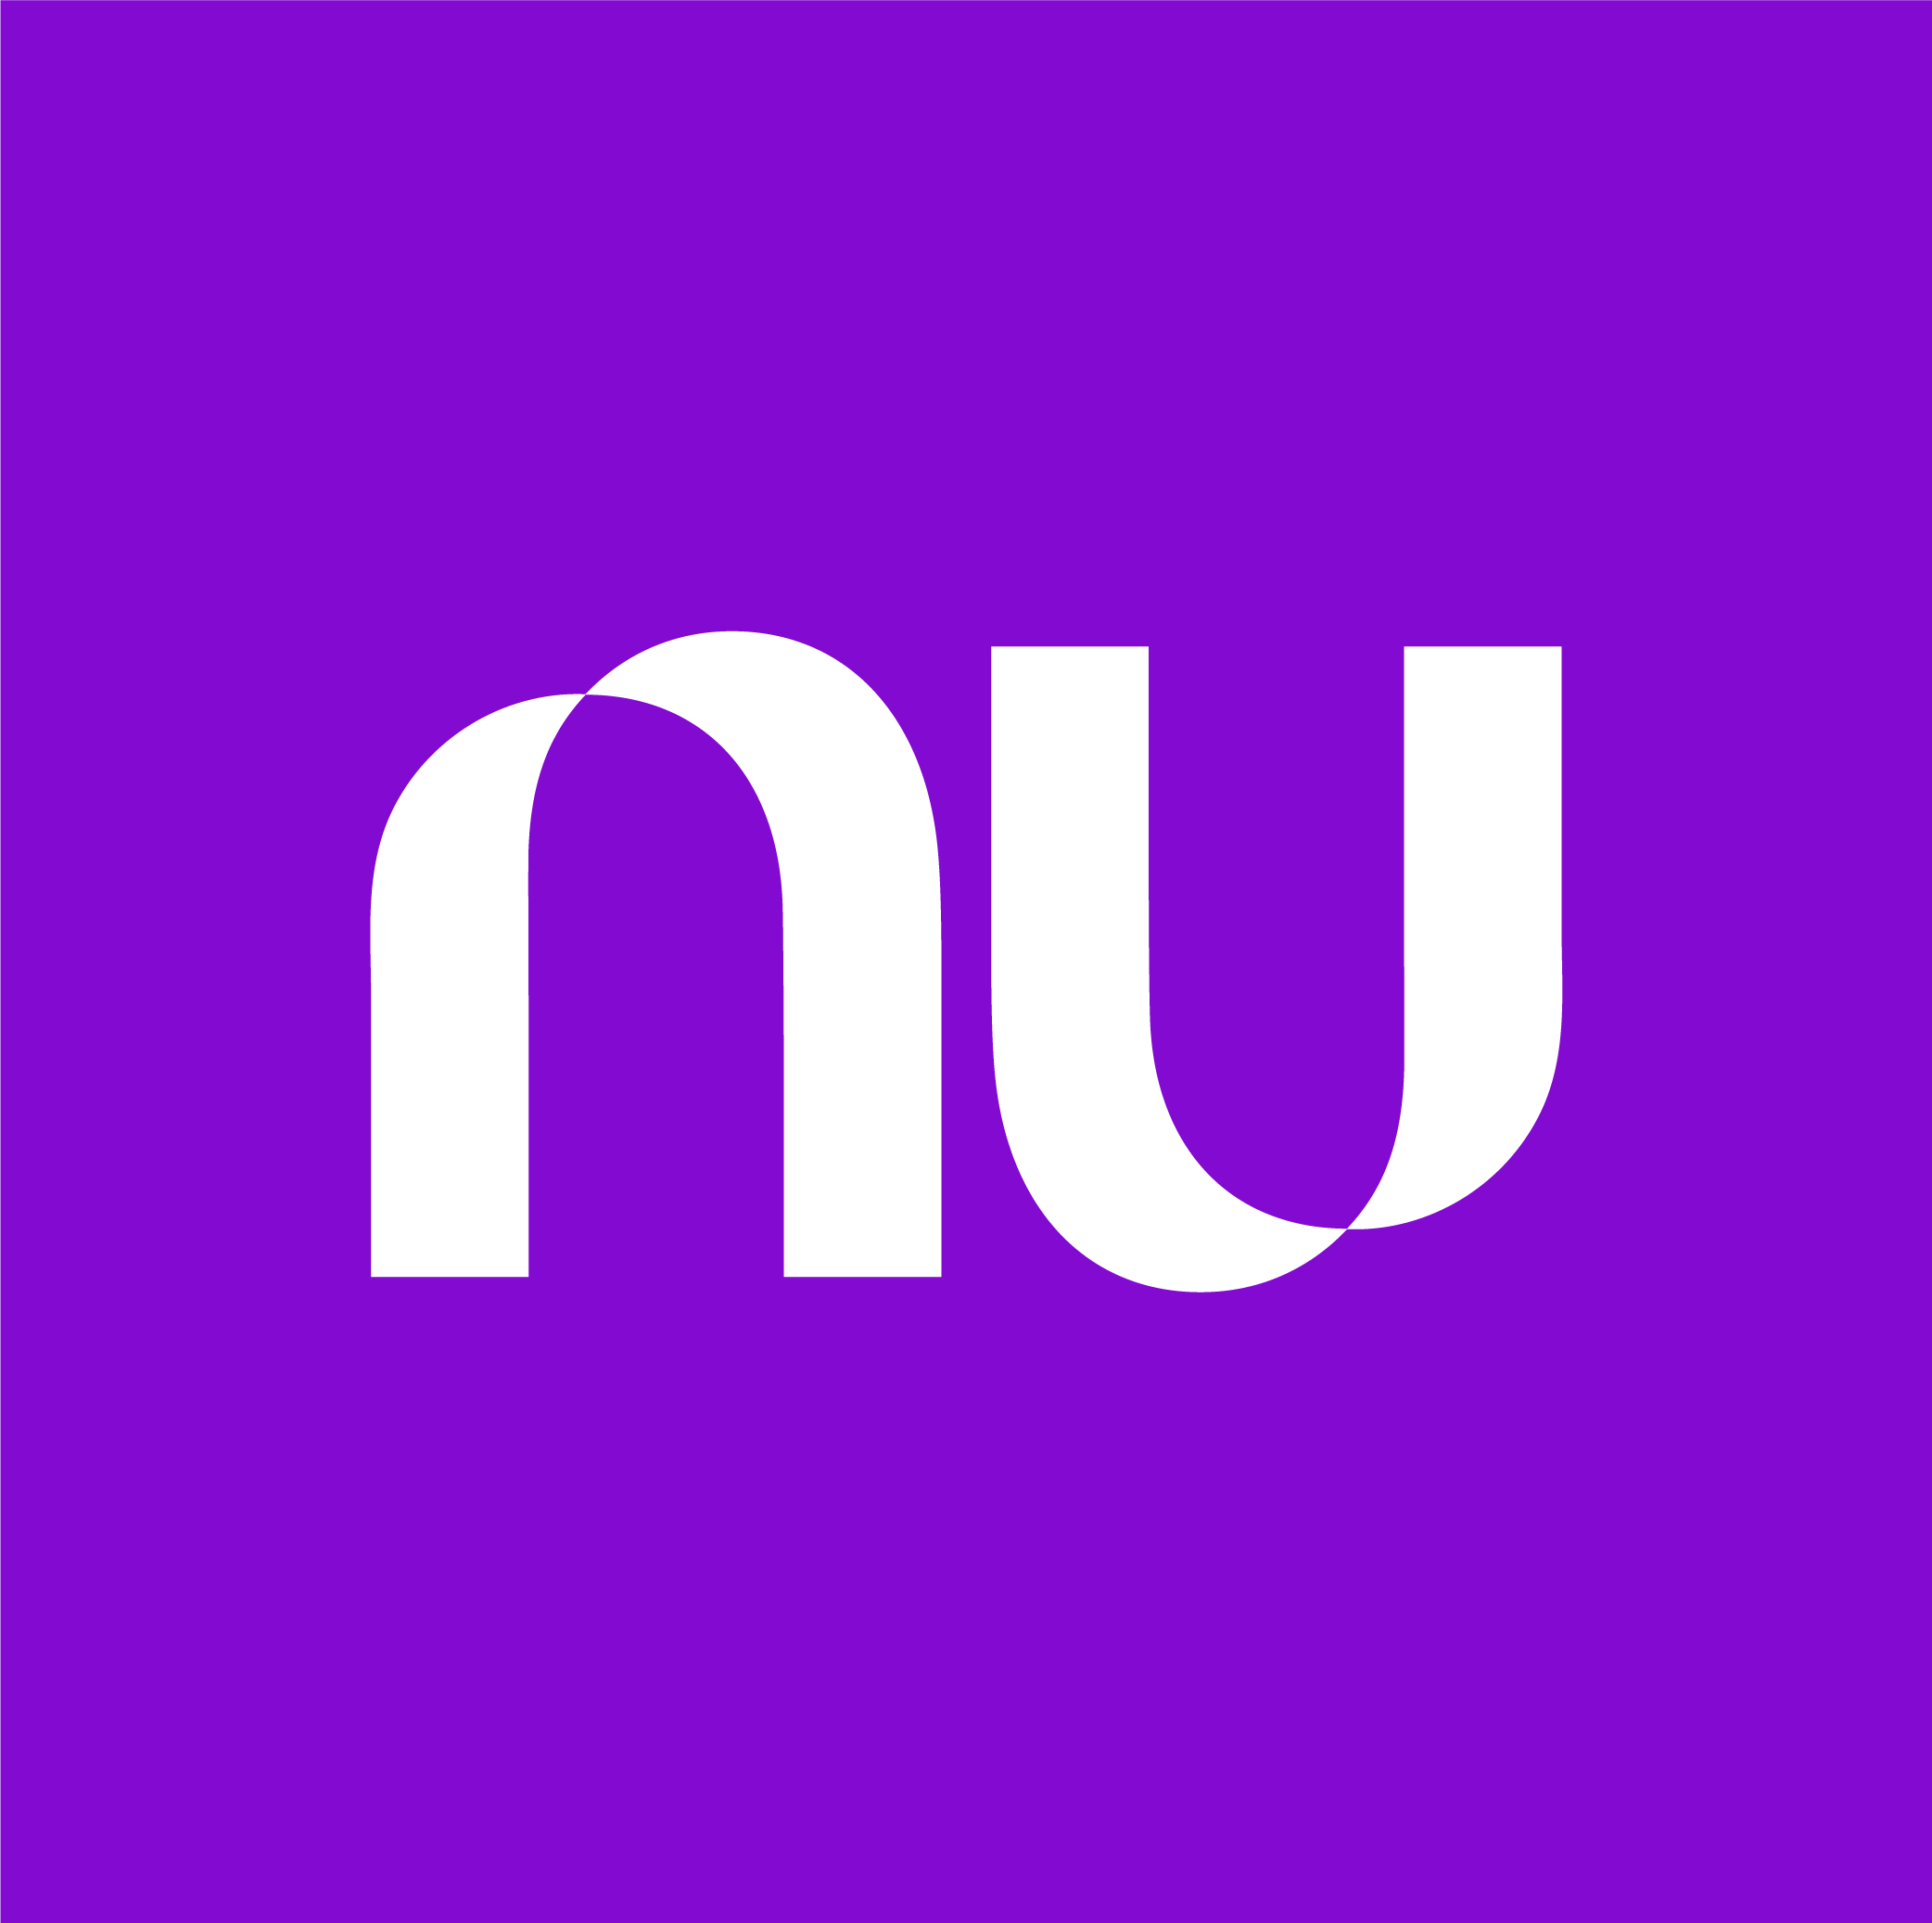 NuBank Logo (PNG e SVG) Download Vetorial Transparente